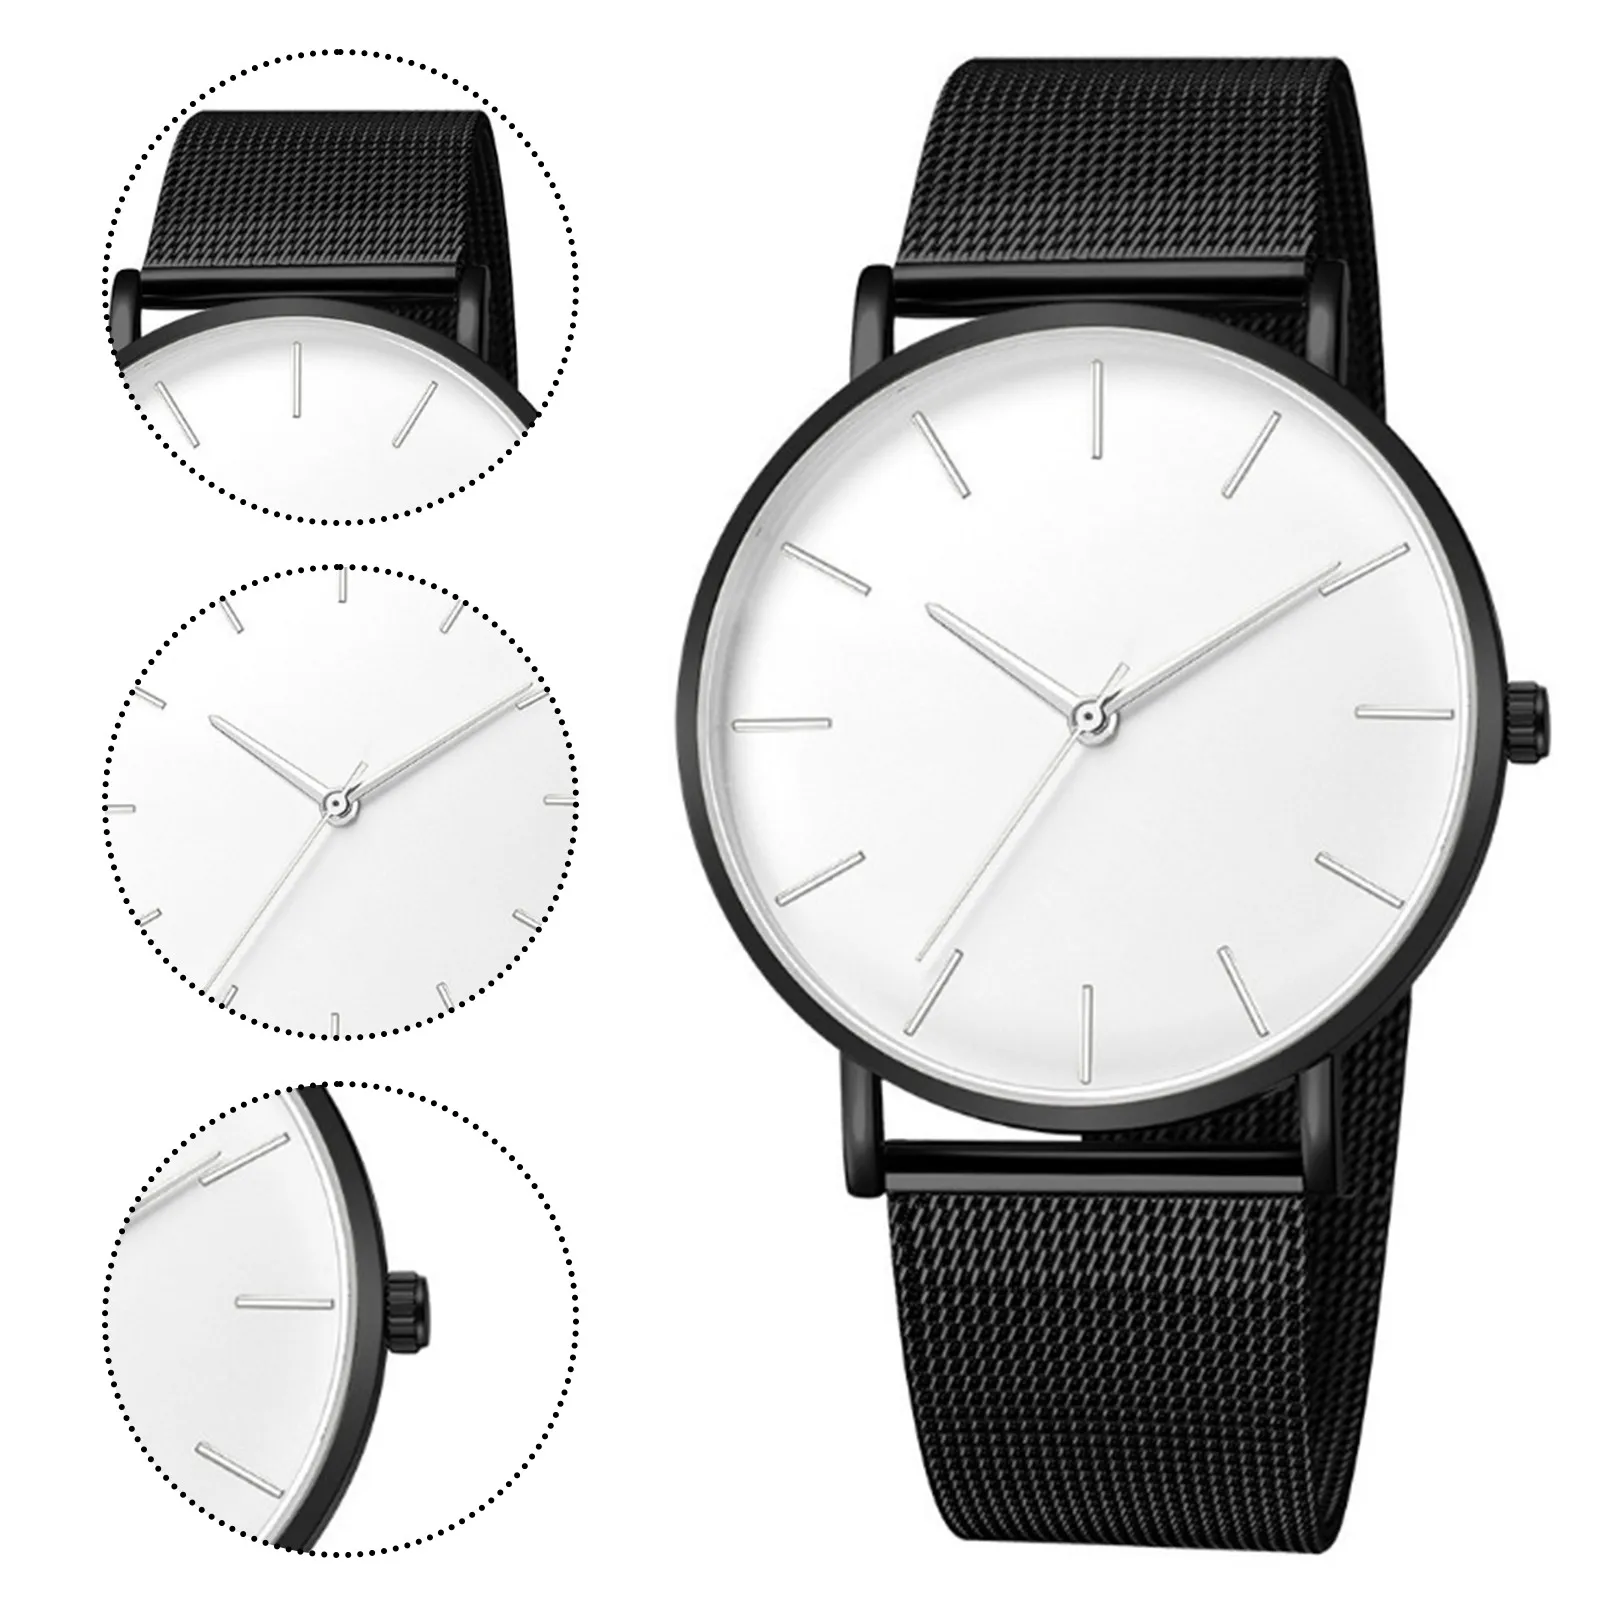 Luxury Watch Quartz Watch Stainless Steel Dial Casual Bracelet Watch Mesh Band Quartz Watch Men Mechanical Wristwatches